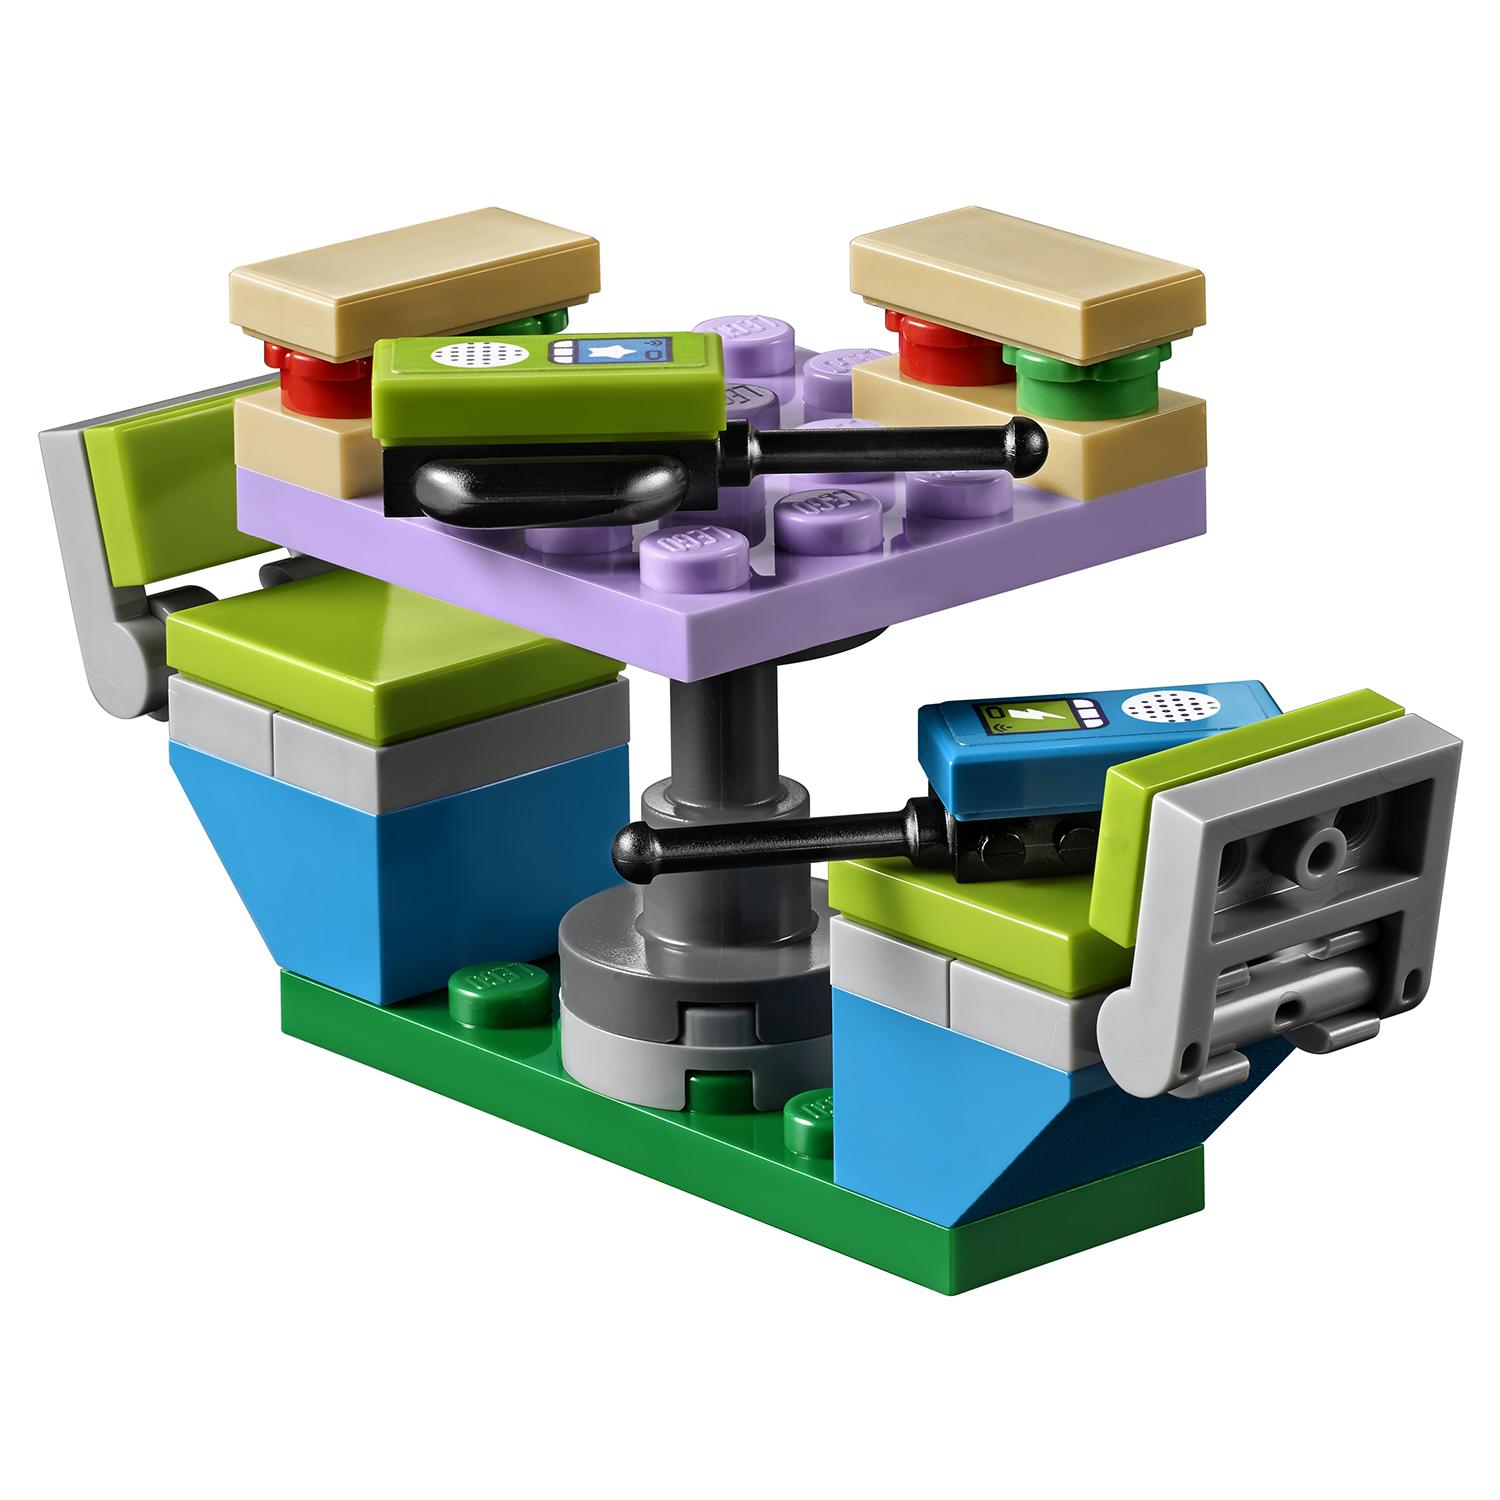 Lego Friends 41339 Дом на колёсах